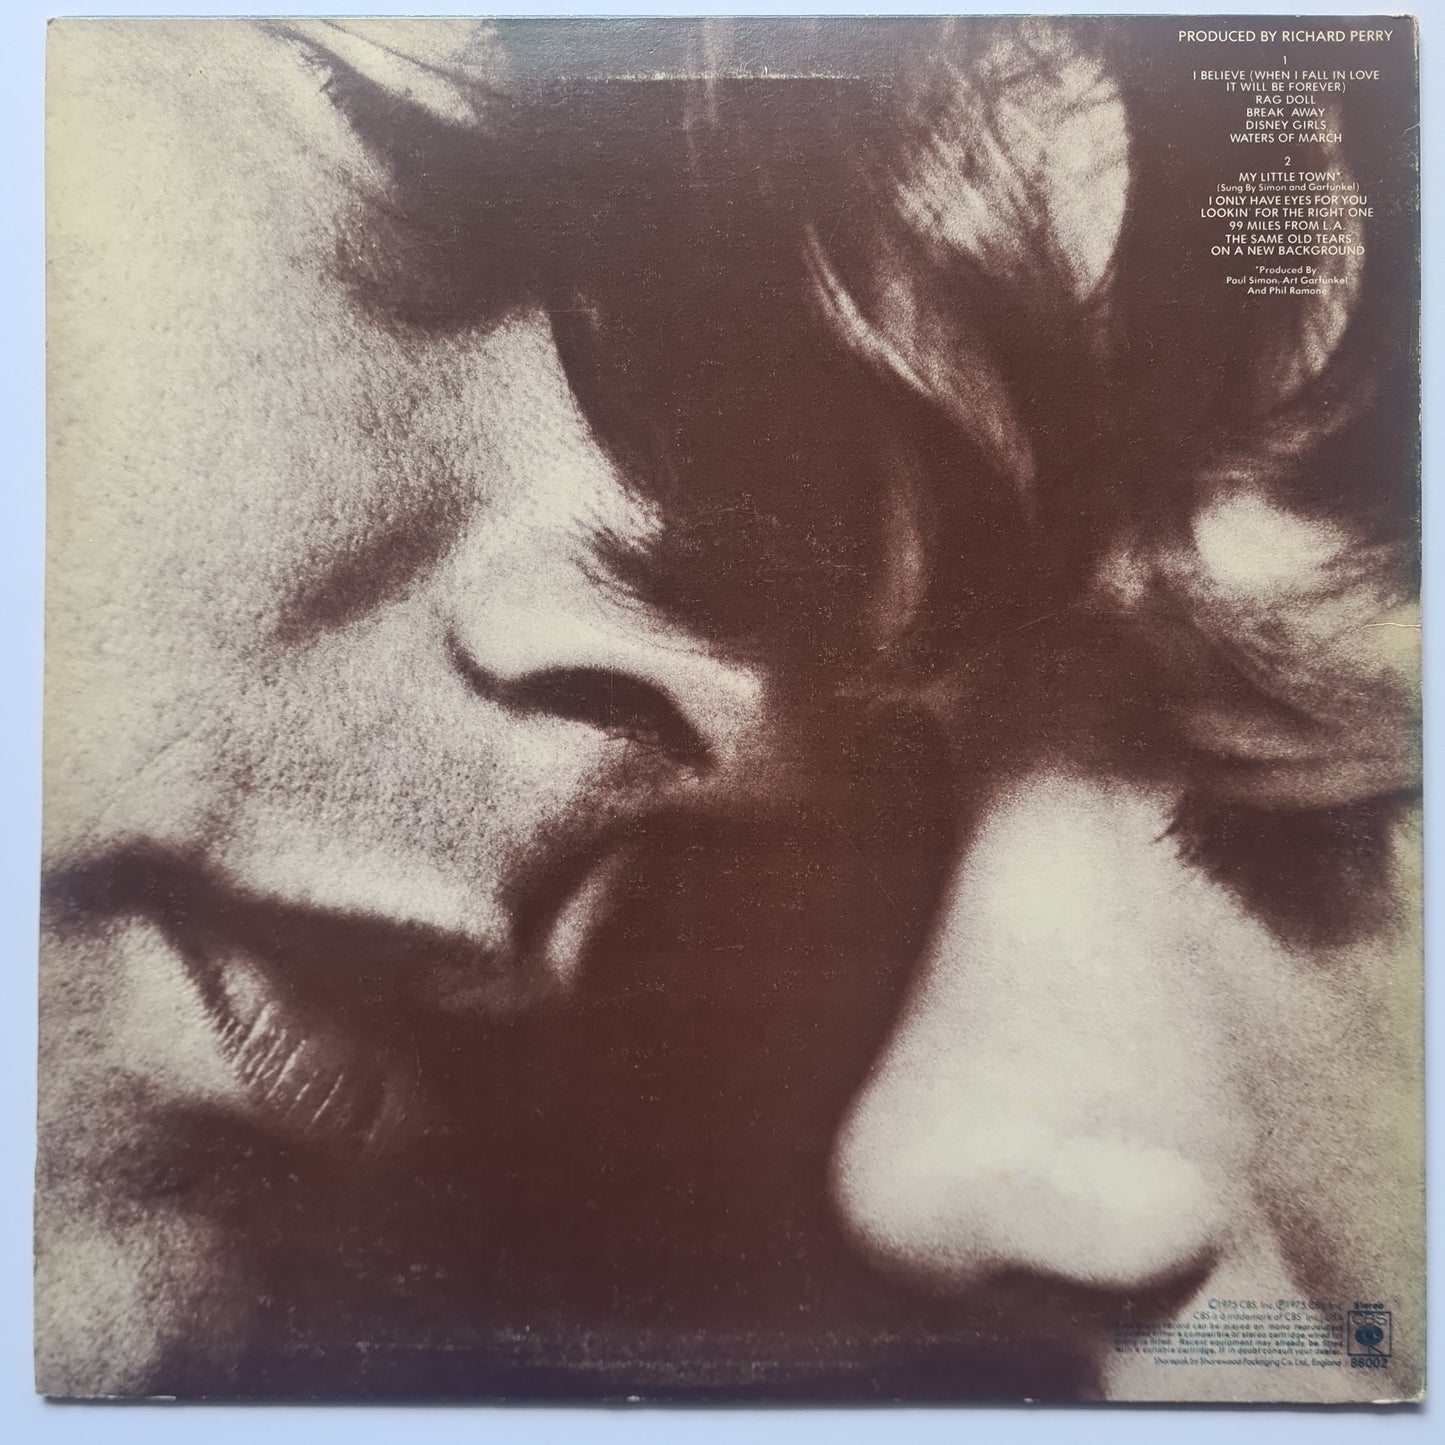 Art Garfunkel – Breakaway - 1975 - Vinyl Record